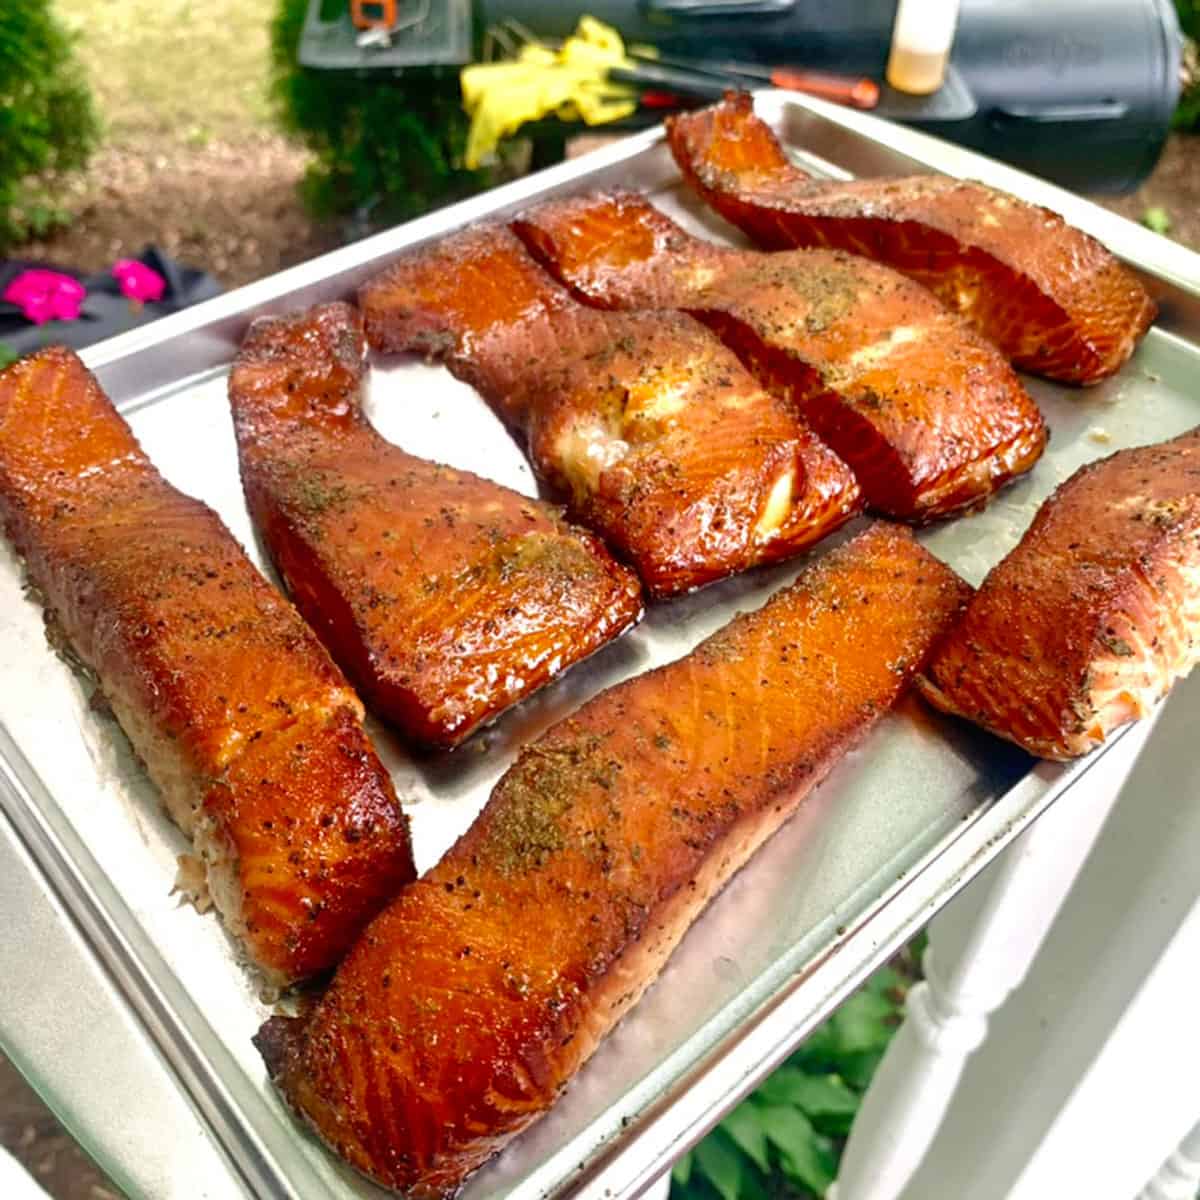 A tray of hot-smoked salmon.